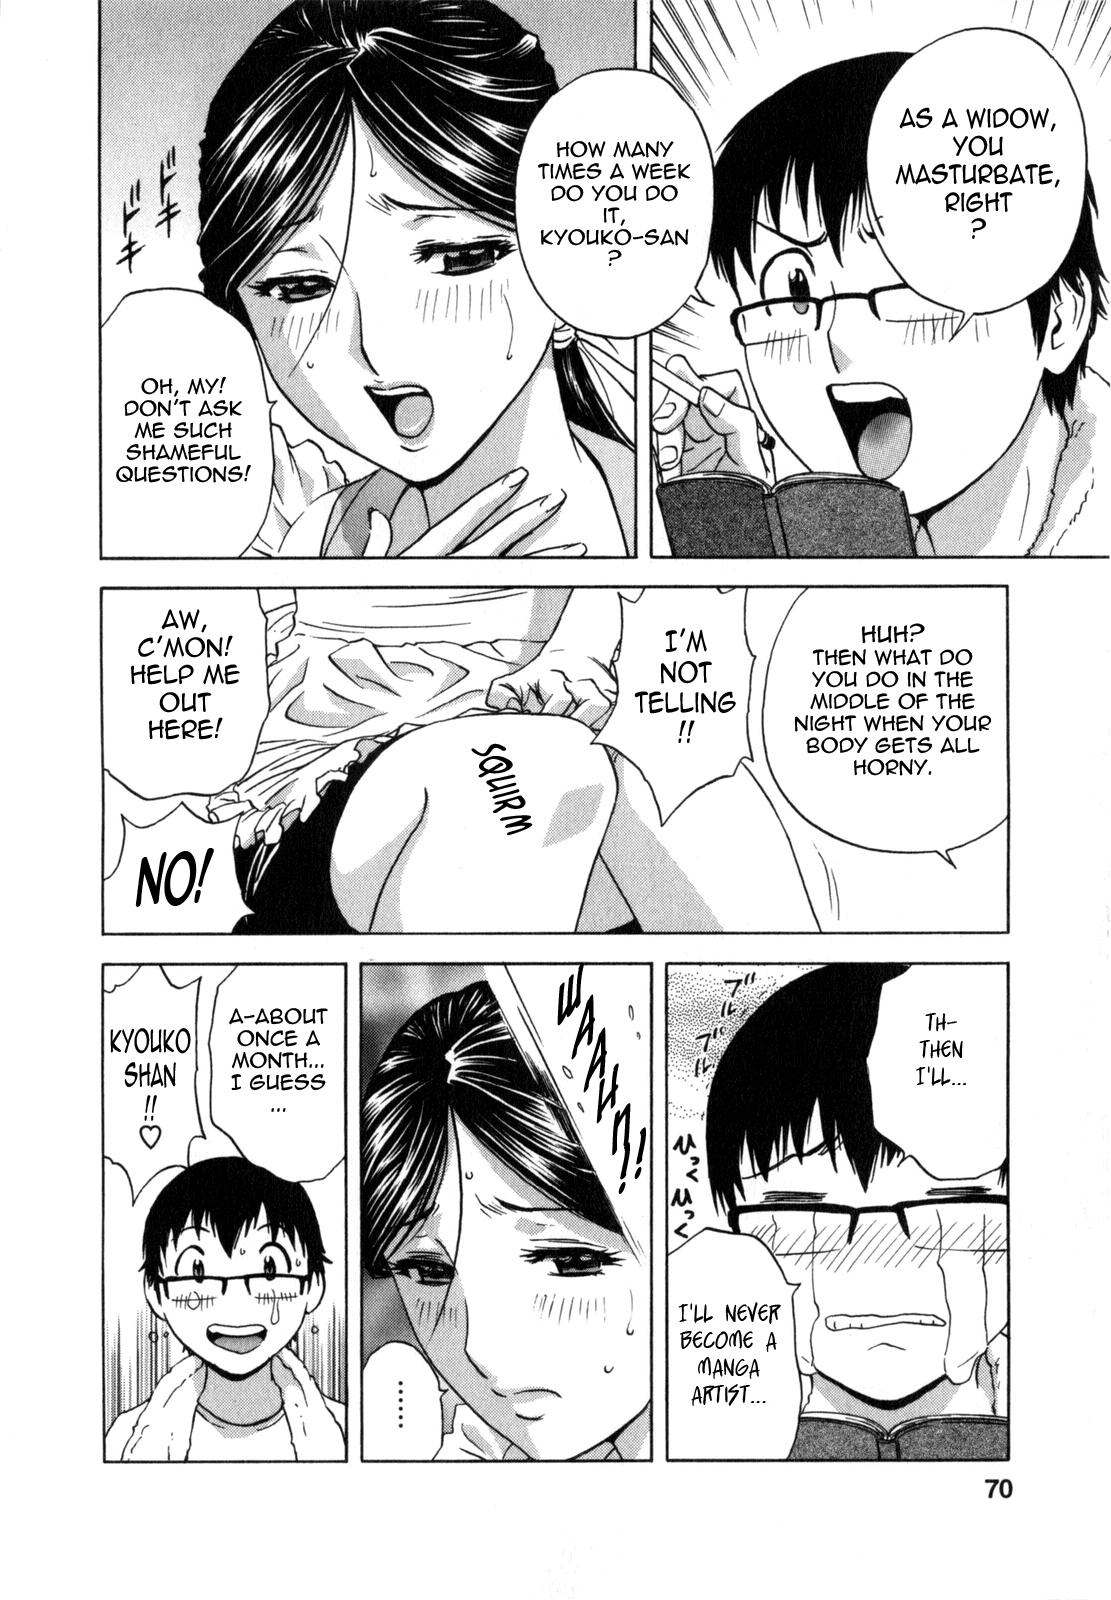 [Hidemaru] Life with Married Women Just Like a Manga 1 - Ch. 1-7 [English] {Tadanohito} 73